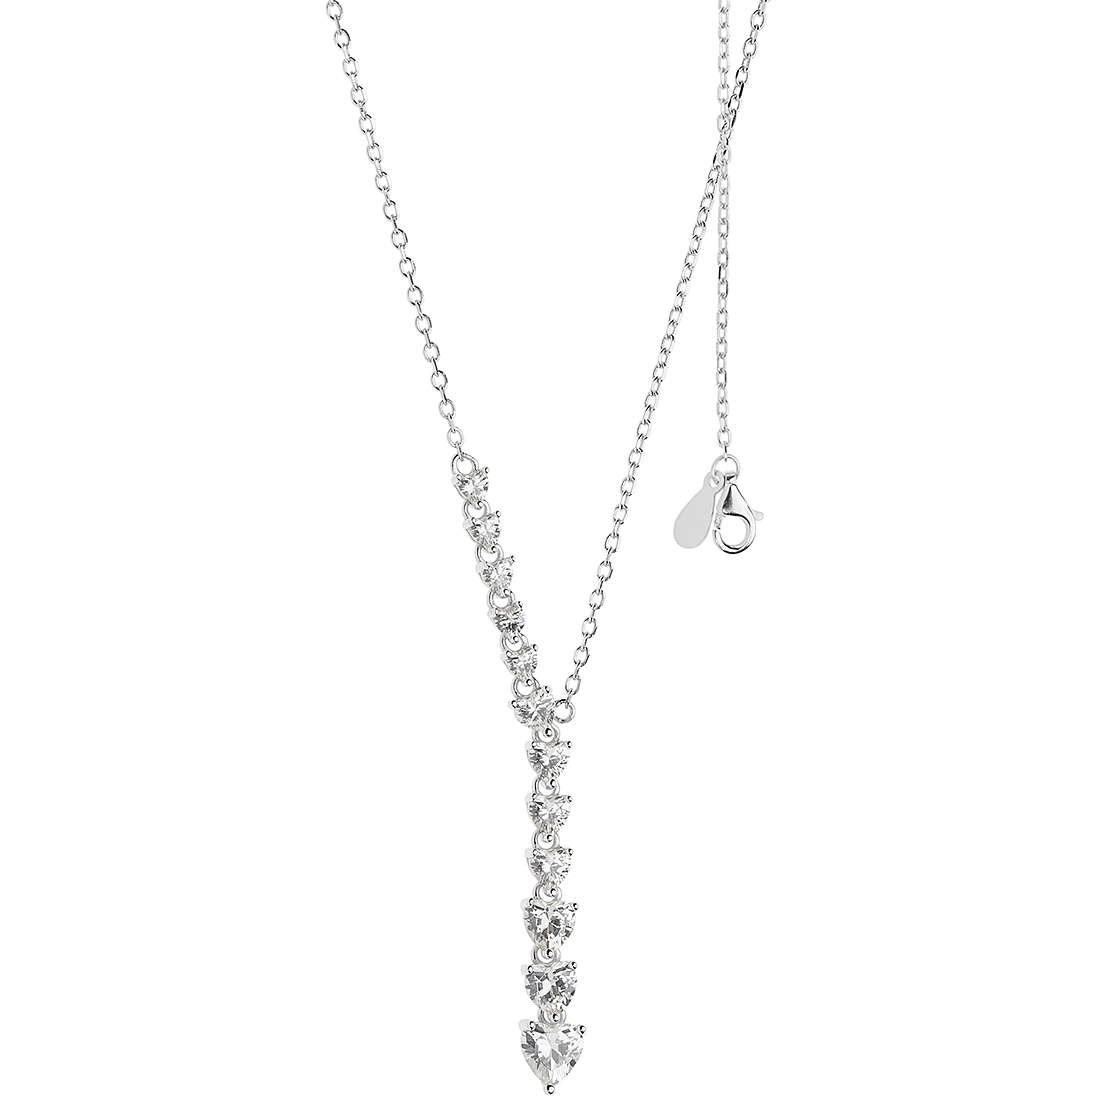 necklace jewel 925 Silver woman jewel Crystals GLA 244